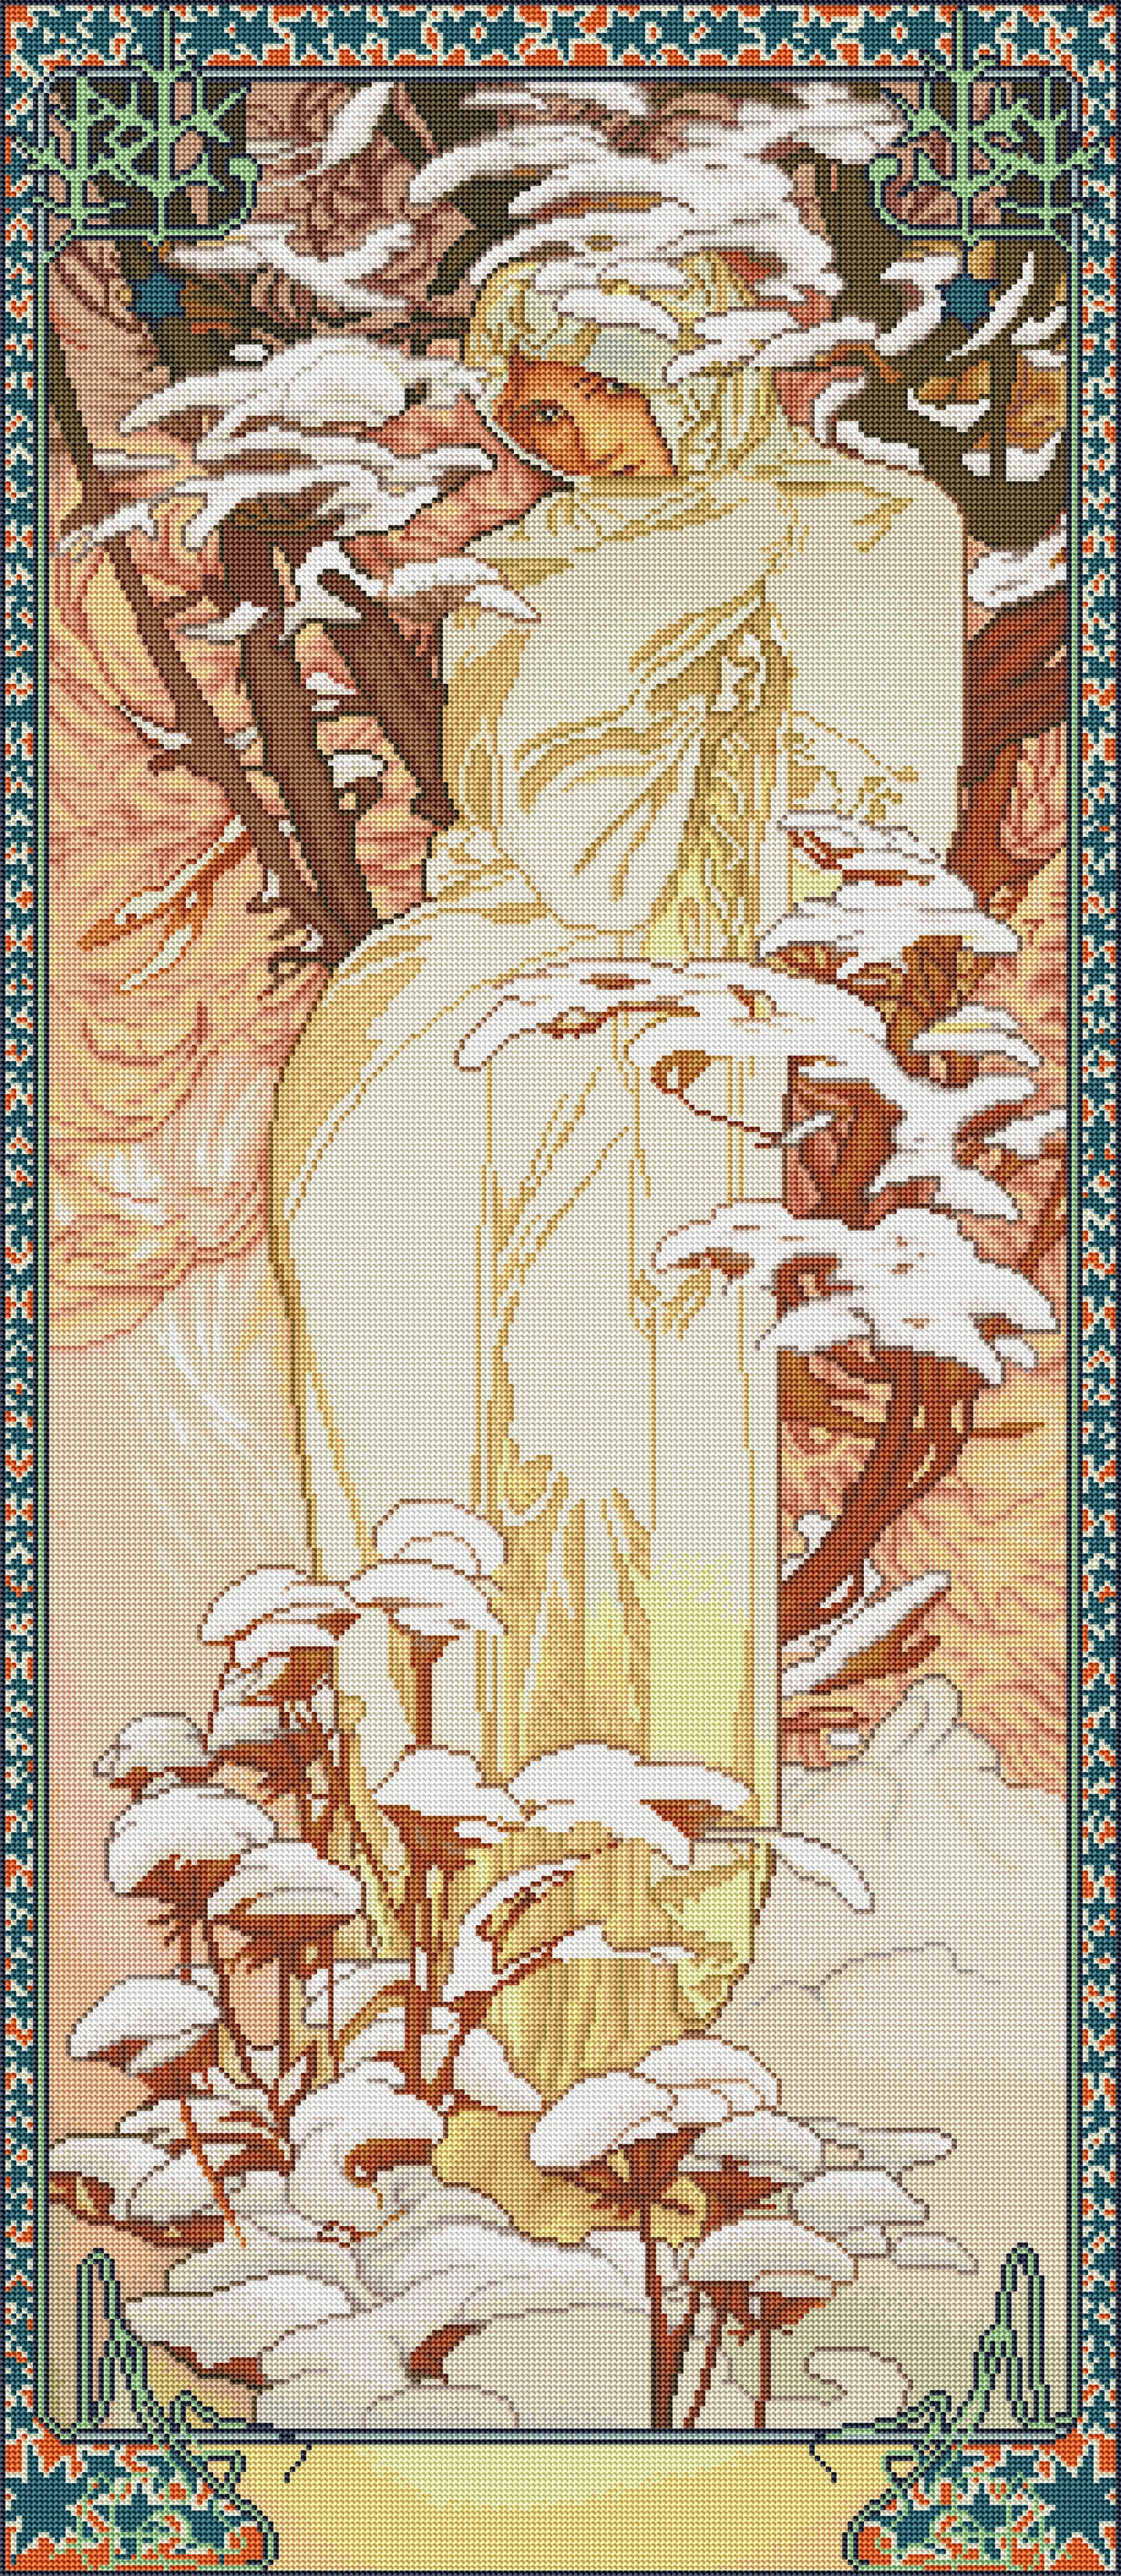 The Seasons: Winter (1900)